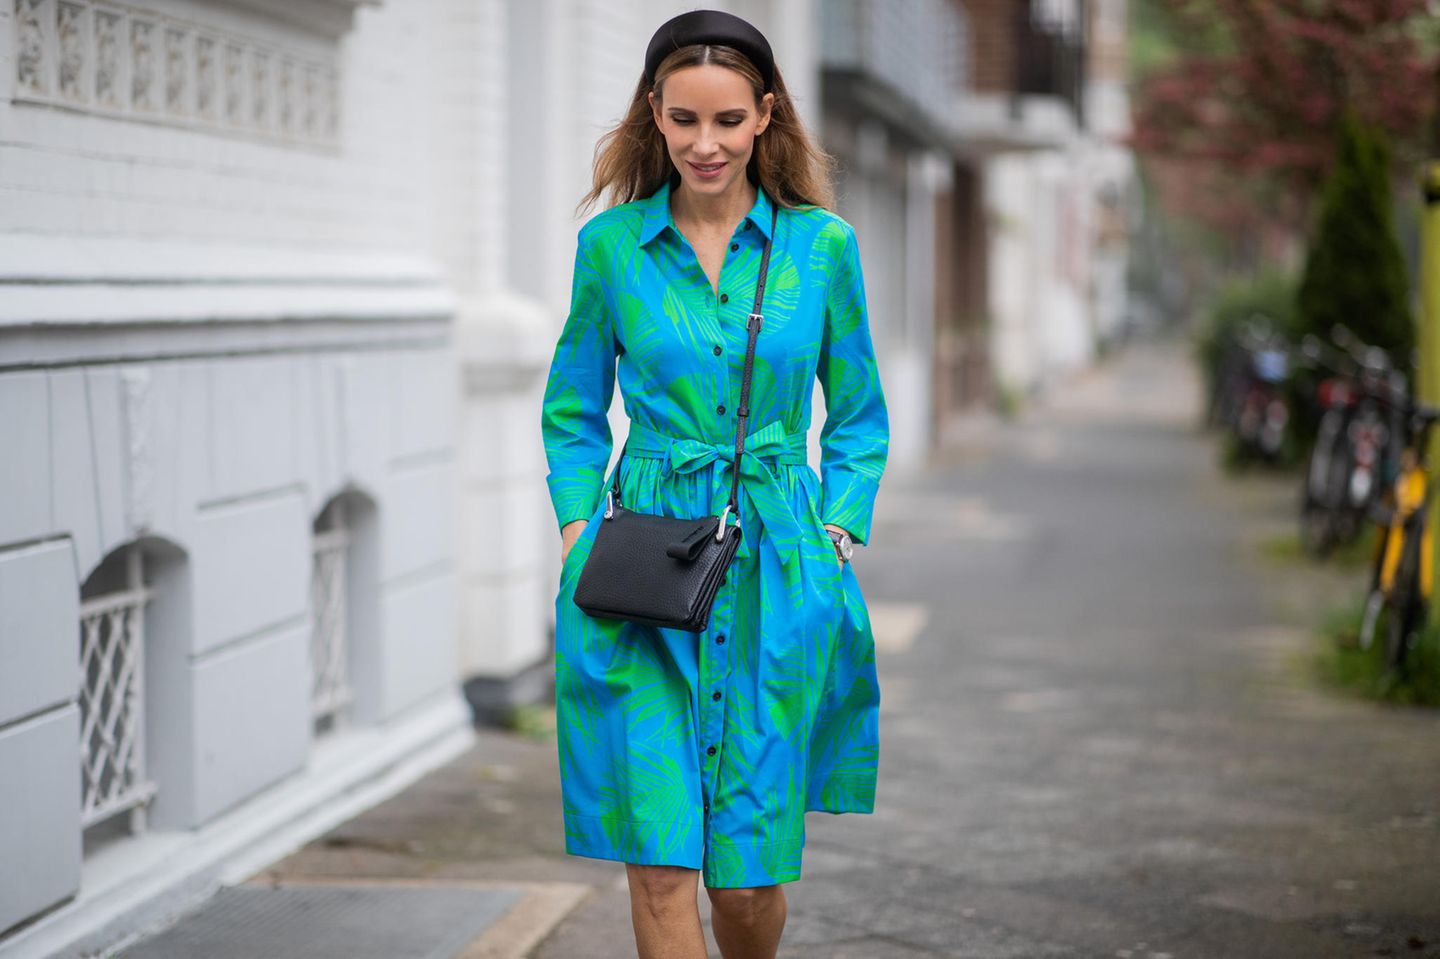 Büro-Outfits bei Hitze: Alexandra Lapp im blau-grünen Midikleid